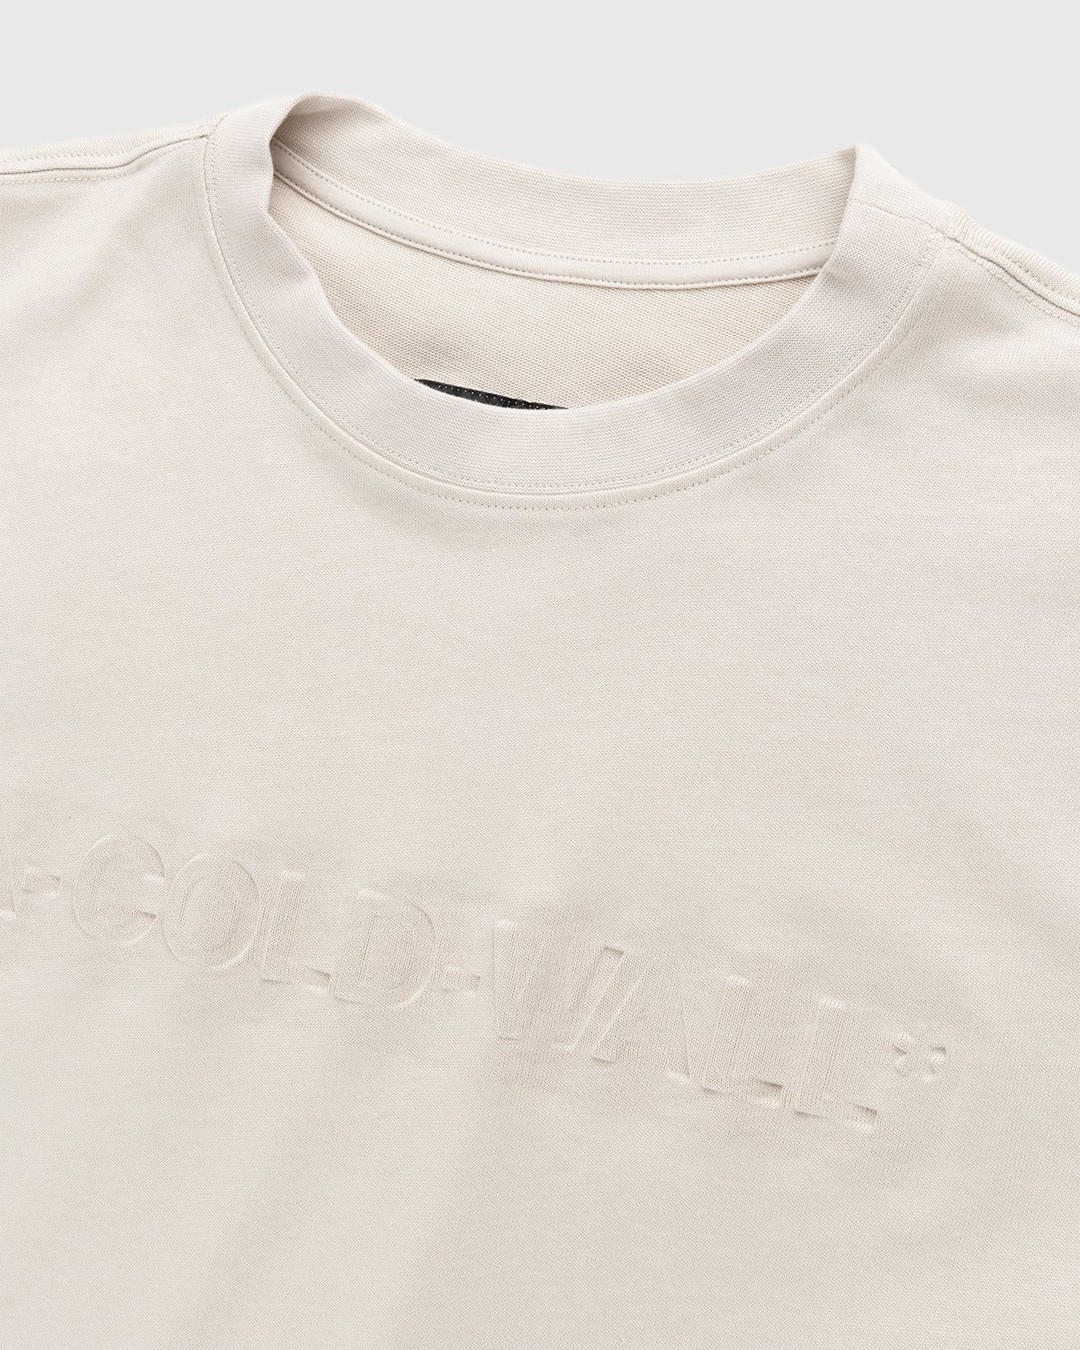 A-Cold-Wall* – Gradient Logo T-Shirt Bone - T-shirts - White - Image 4